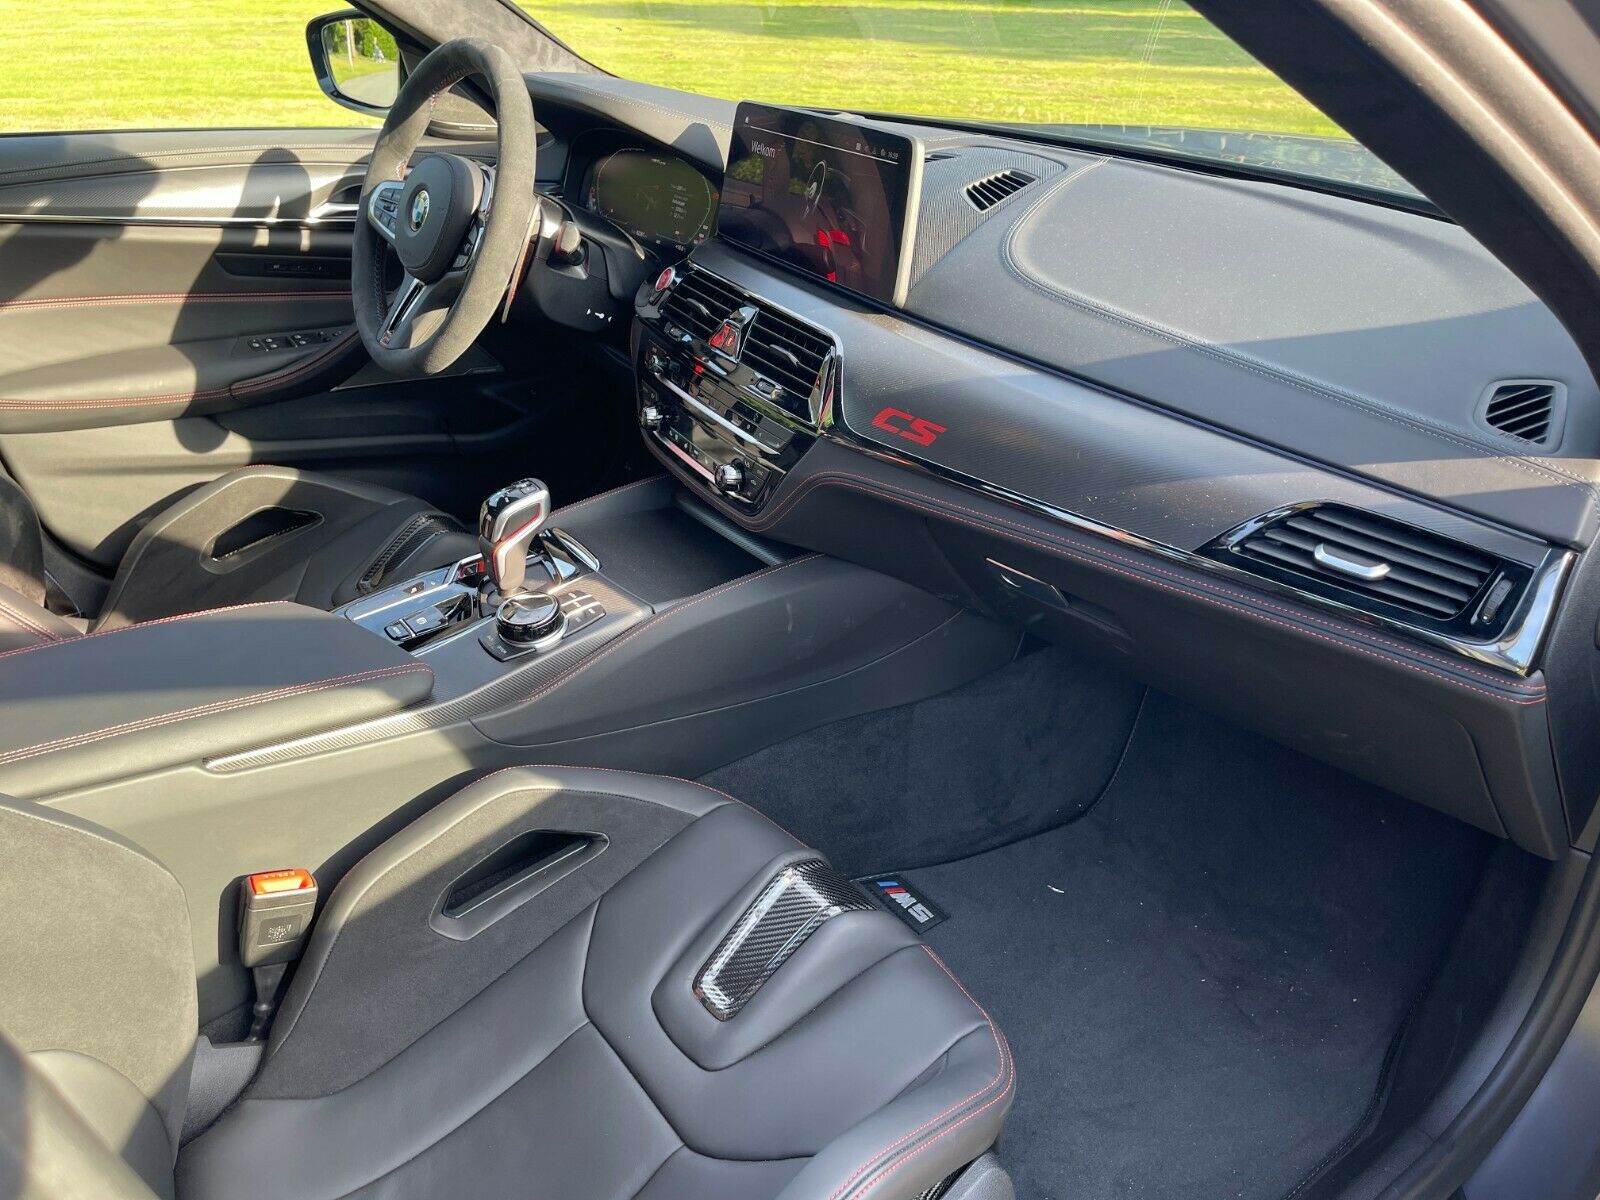 BMW M5 CS cockpit